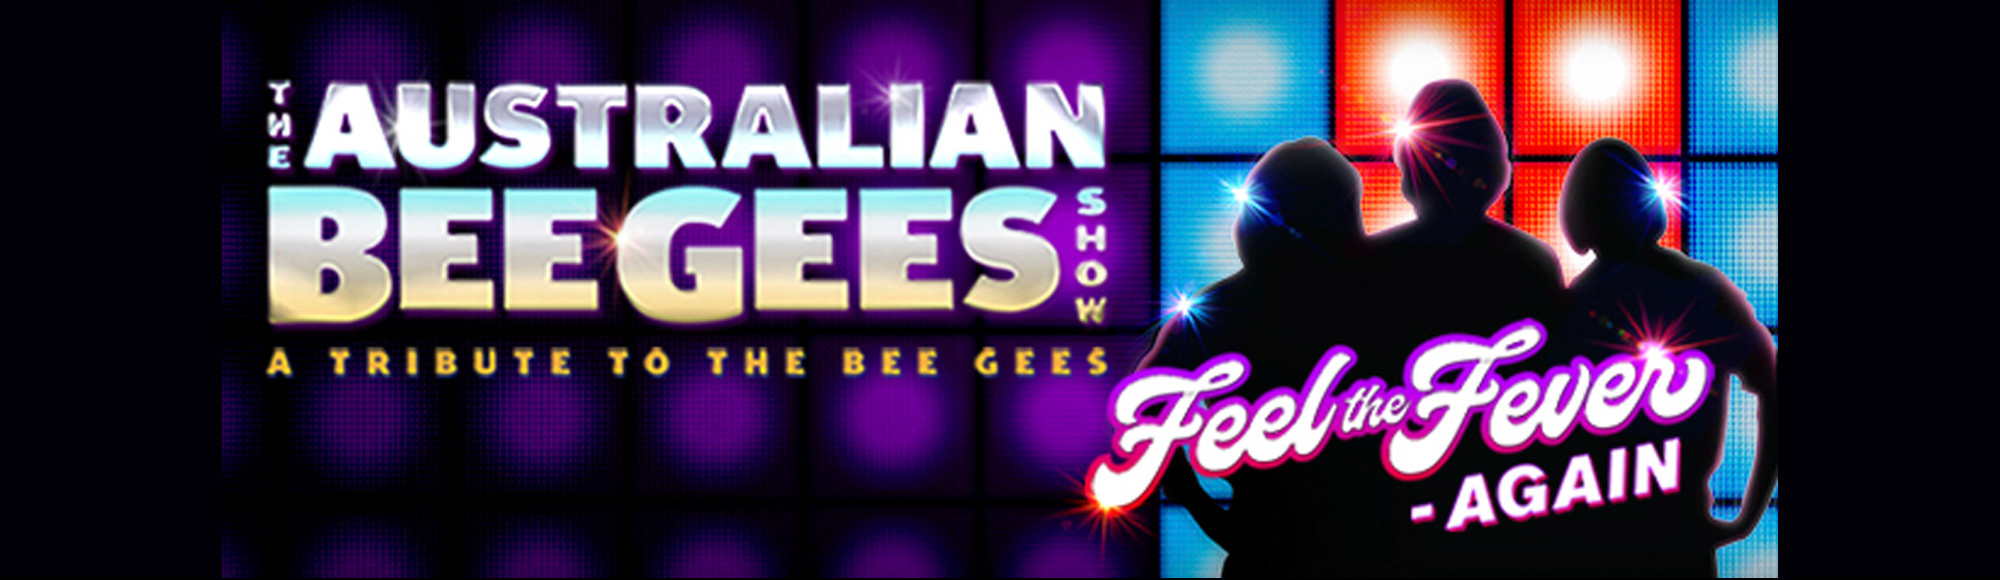 Australian Bee Gees show